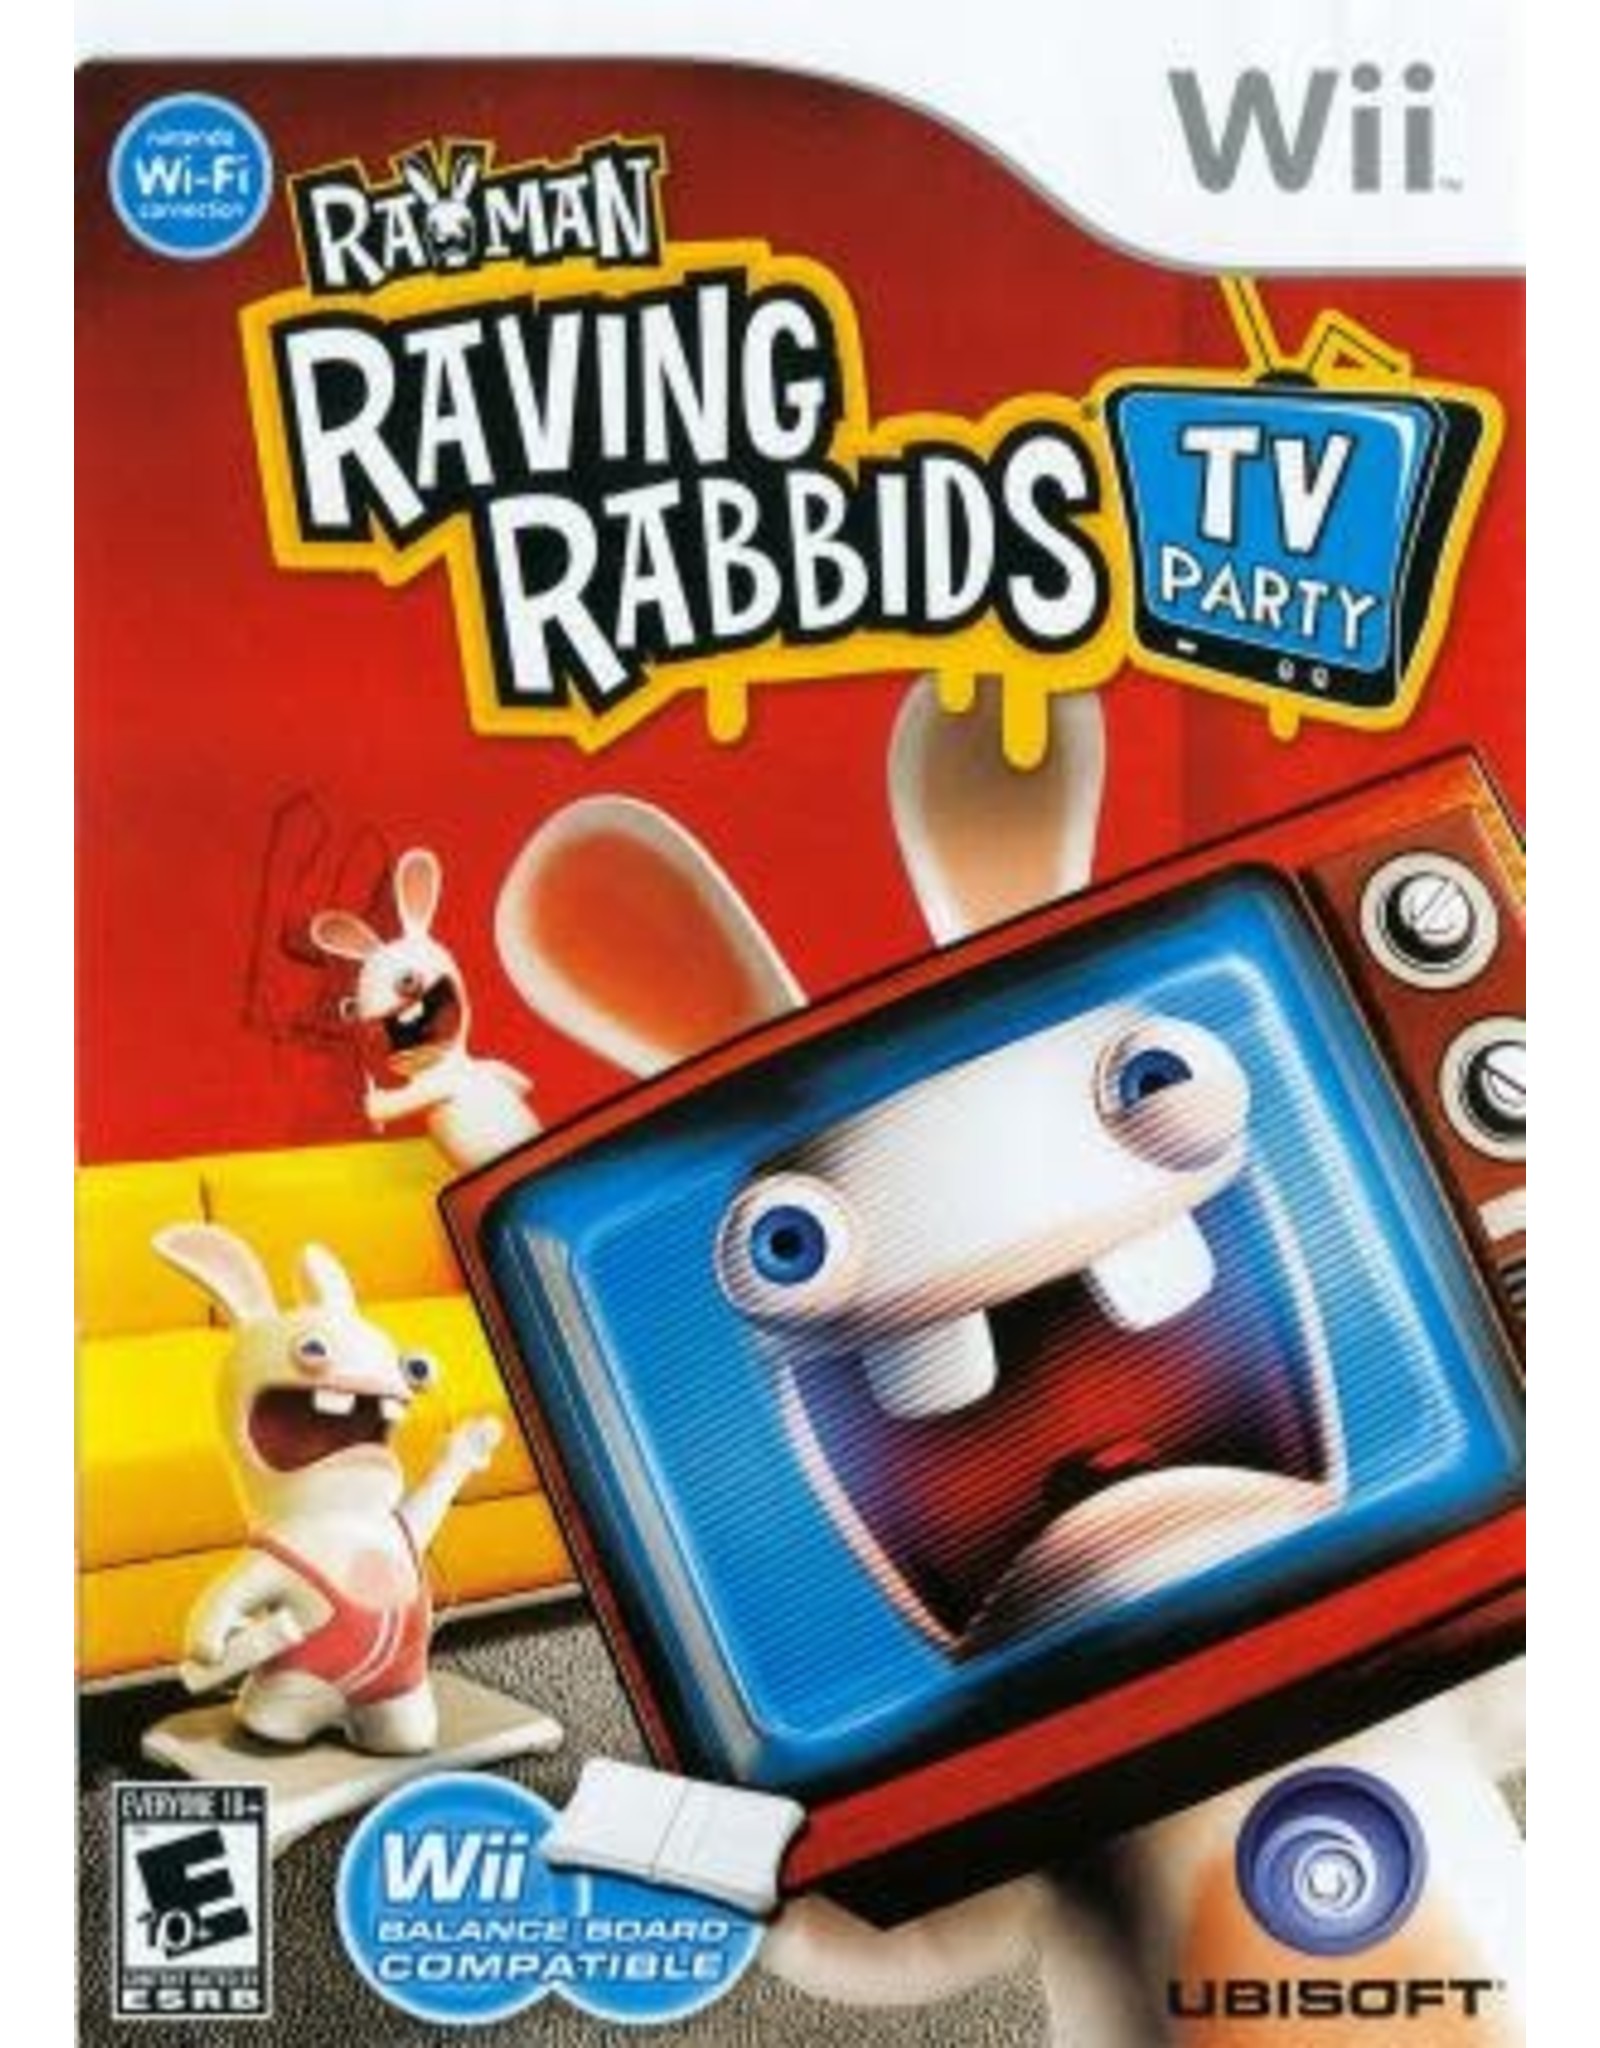 Wii Rayman Raving Rabbids TV Party (CiB)